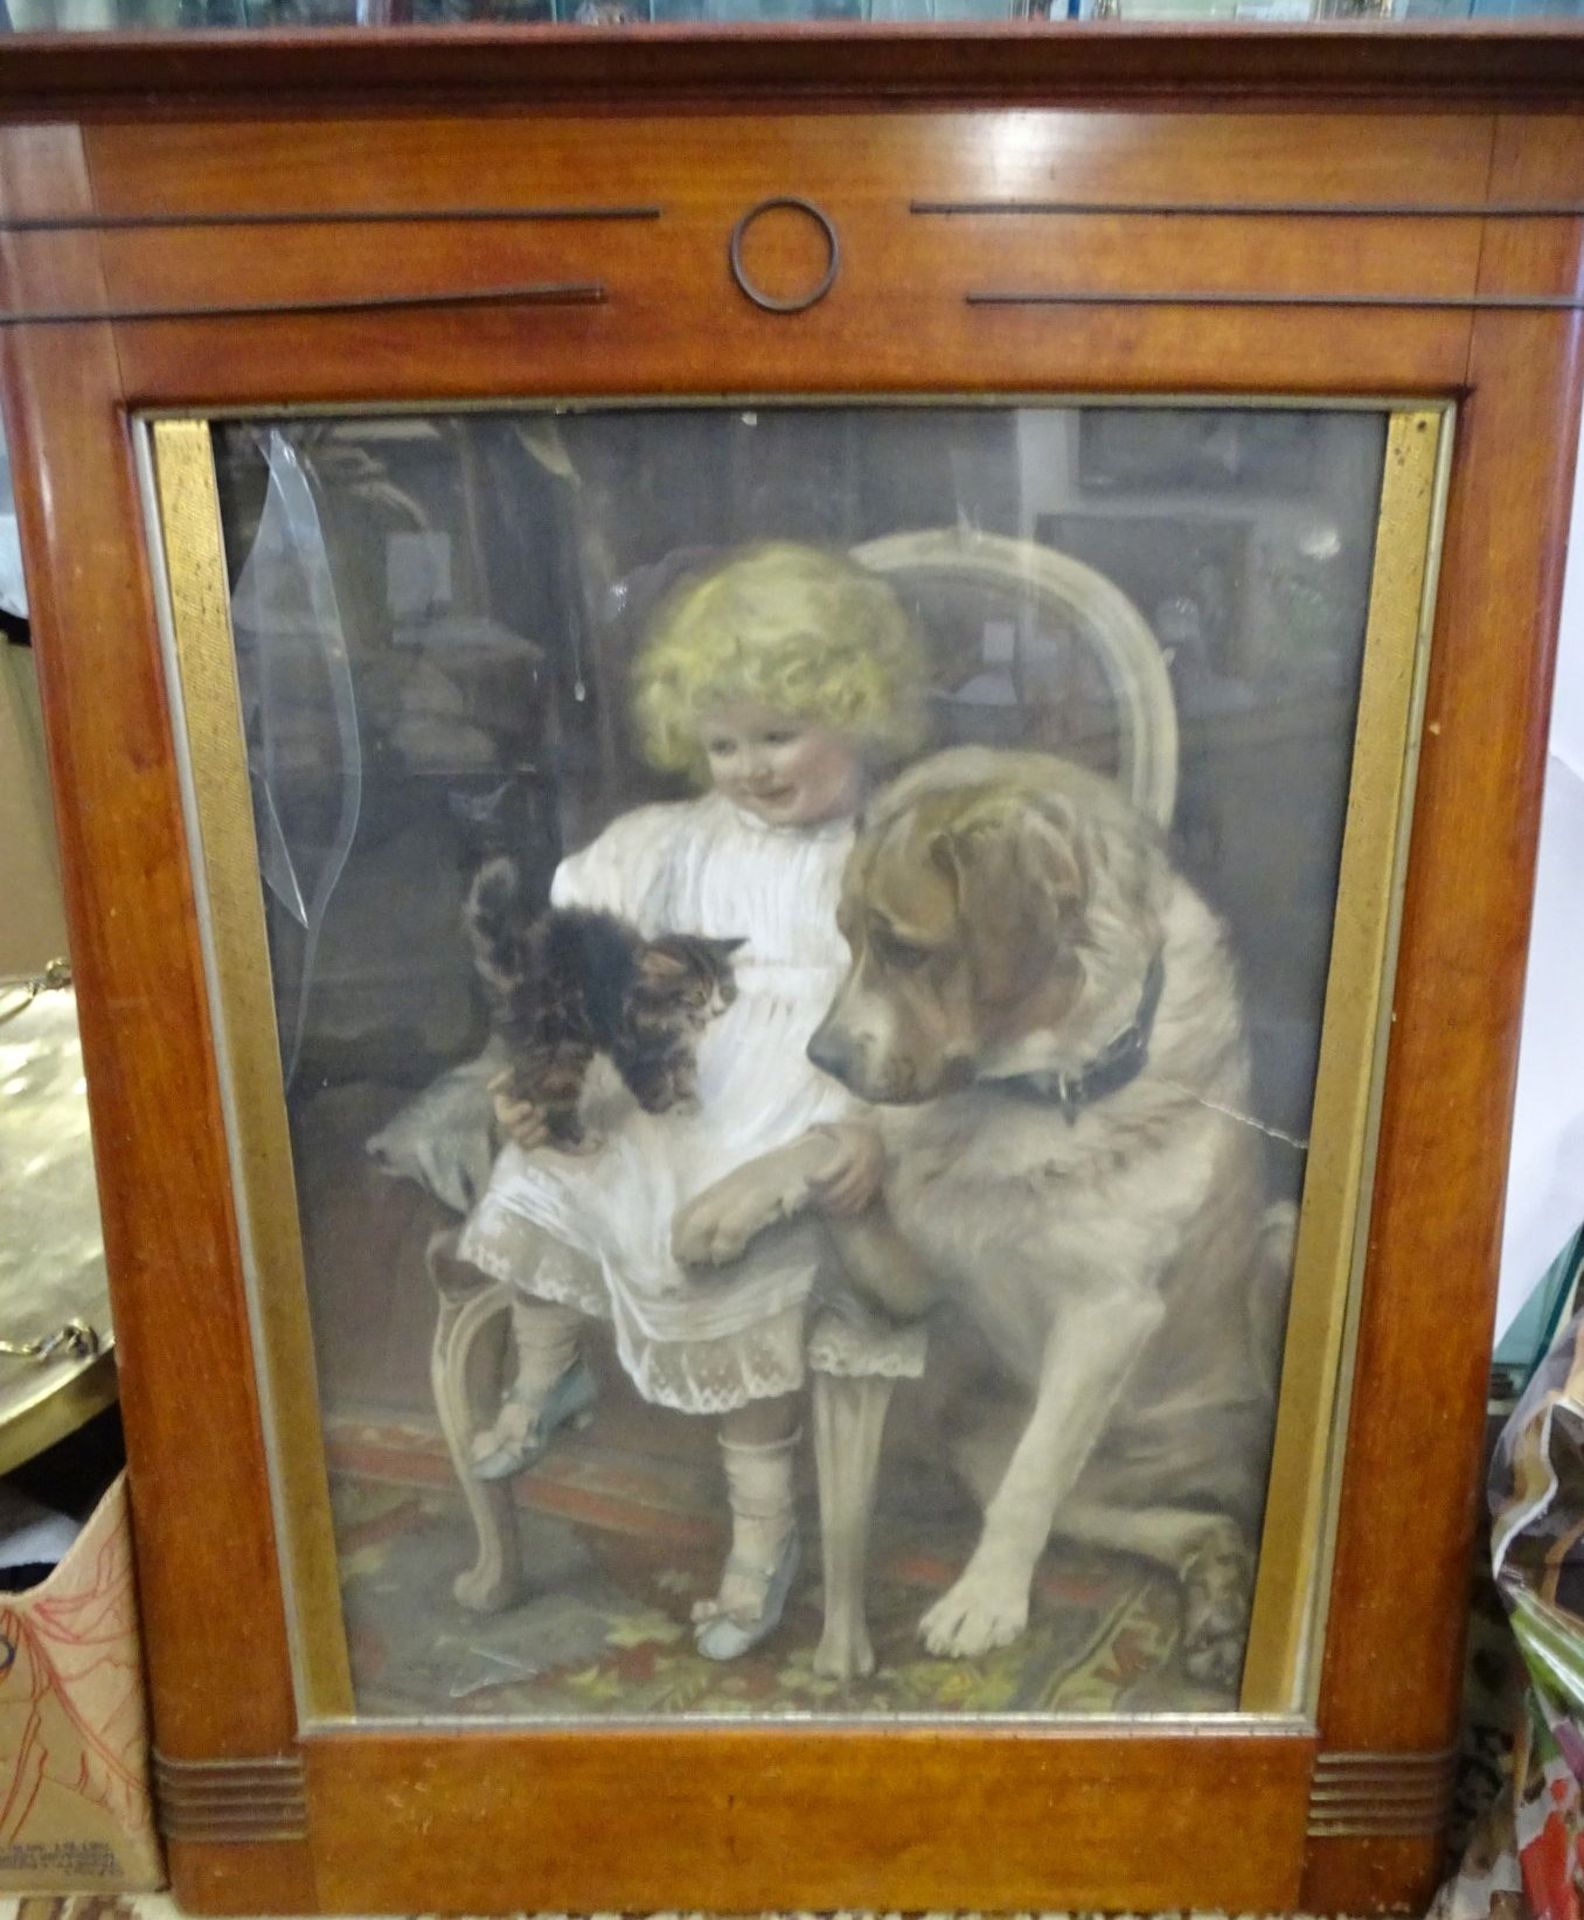 gr. Kunstdruck nach Arthur John ELSLEY (1860-1952), 1901, Kind mit Hunden, schöner Holzrahmen, Gla - Bild 3 aus 3